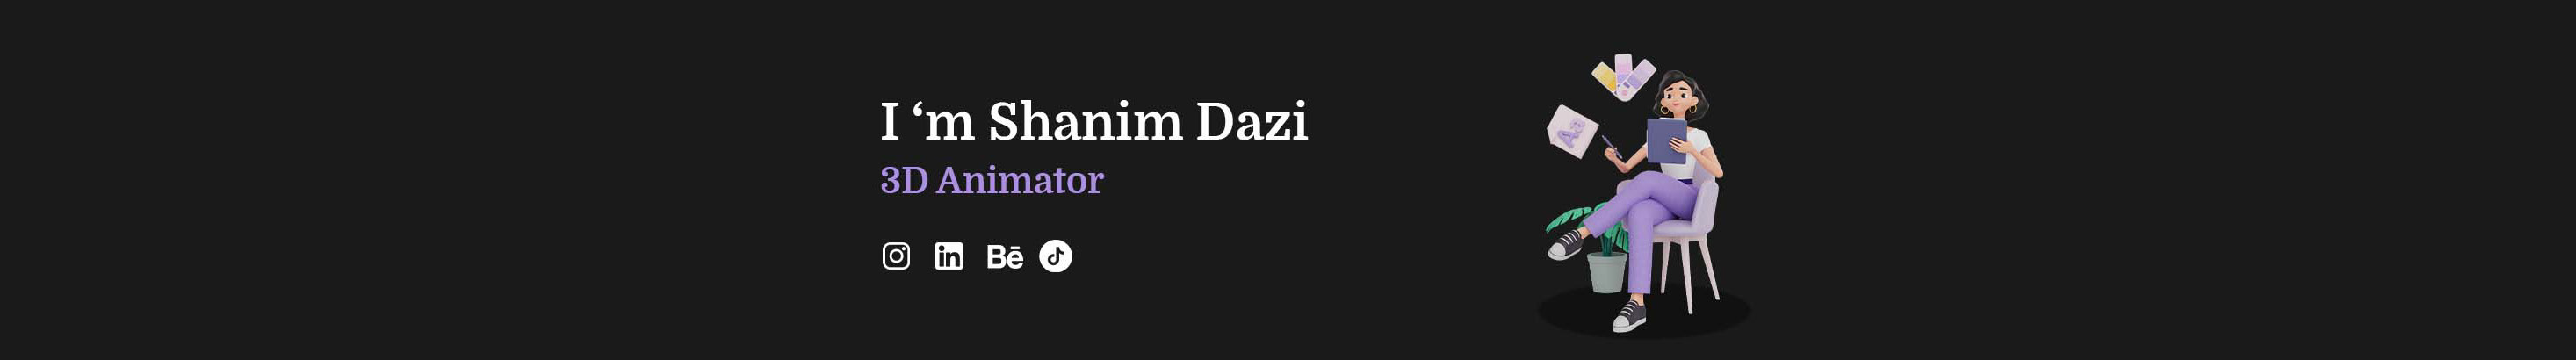 Profielbanner van Shanim Dazi